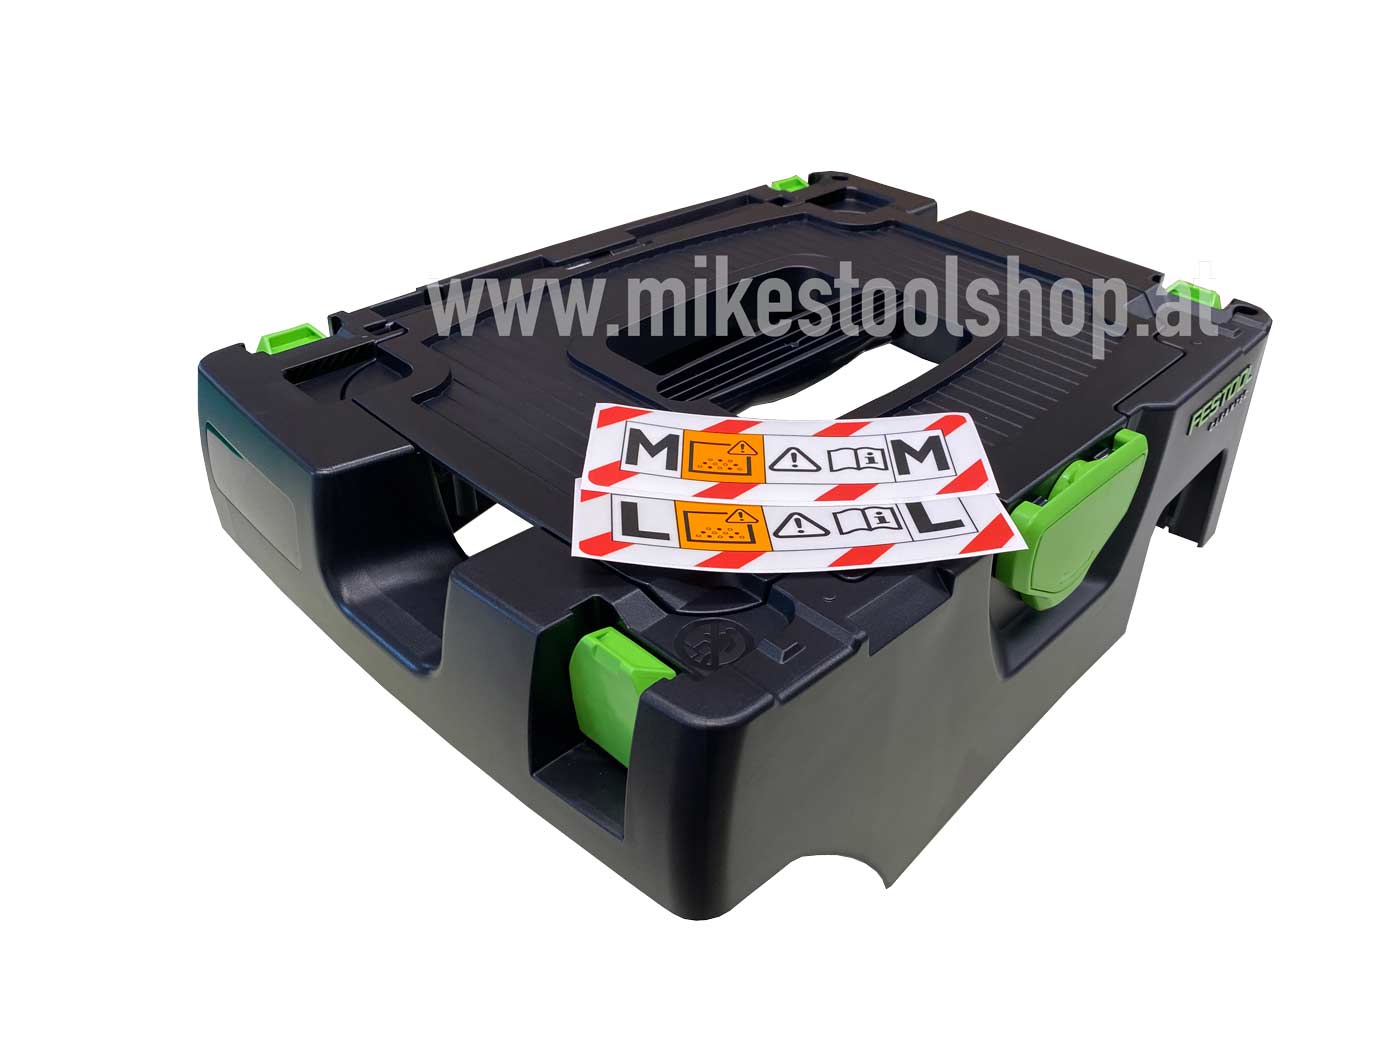 Filter CTL Mini CT Mini Lamellenfilter Luftfilter für Festool 456 077 